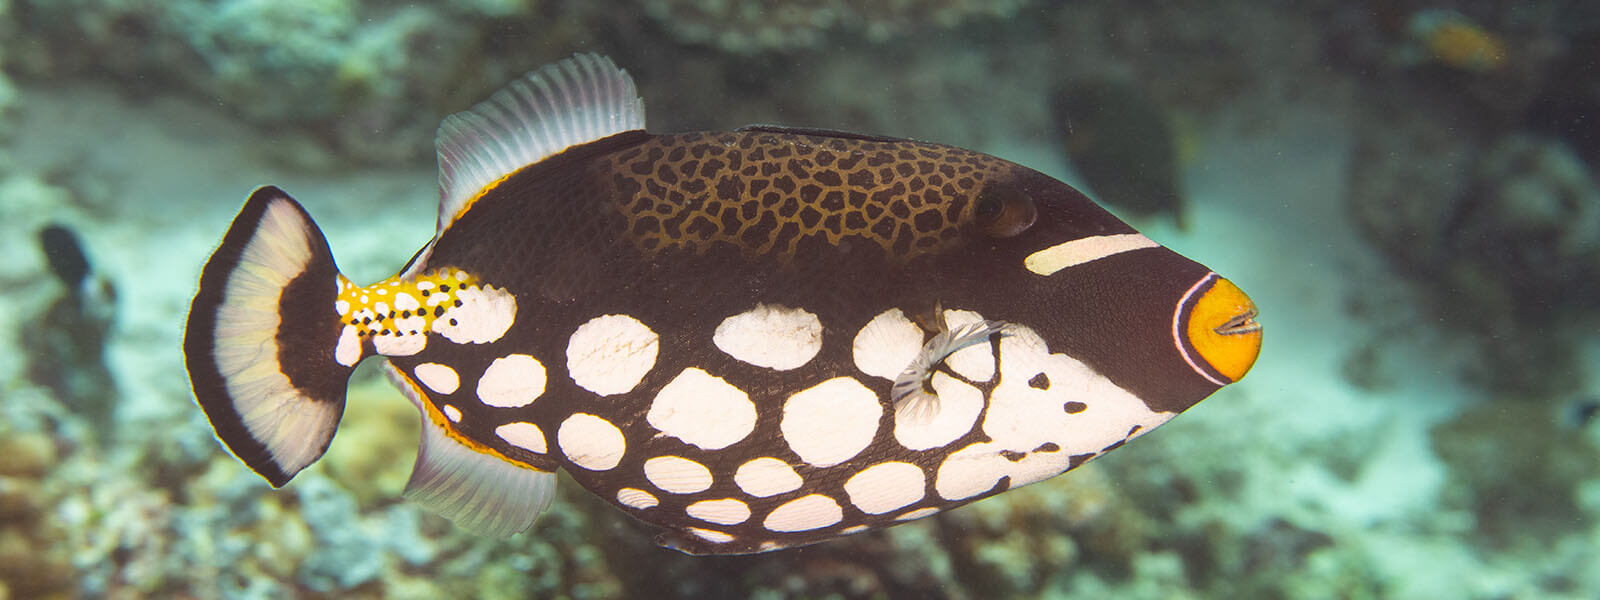 Clown triggerfish are popular amongst snorkelers visiting places like Raja Ampat, Komodo, and Palau